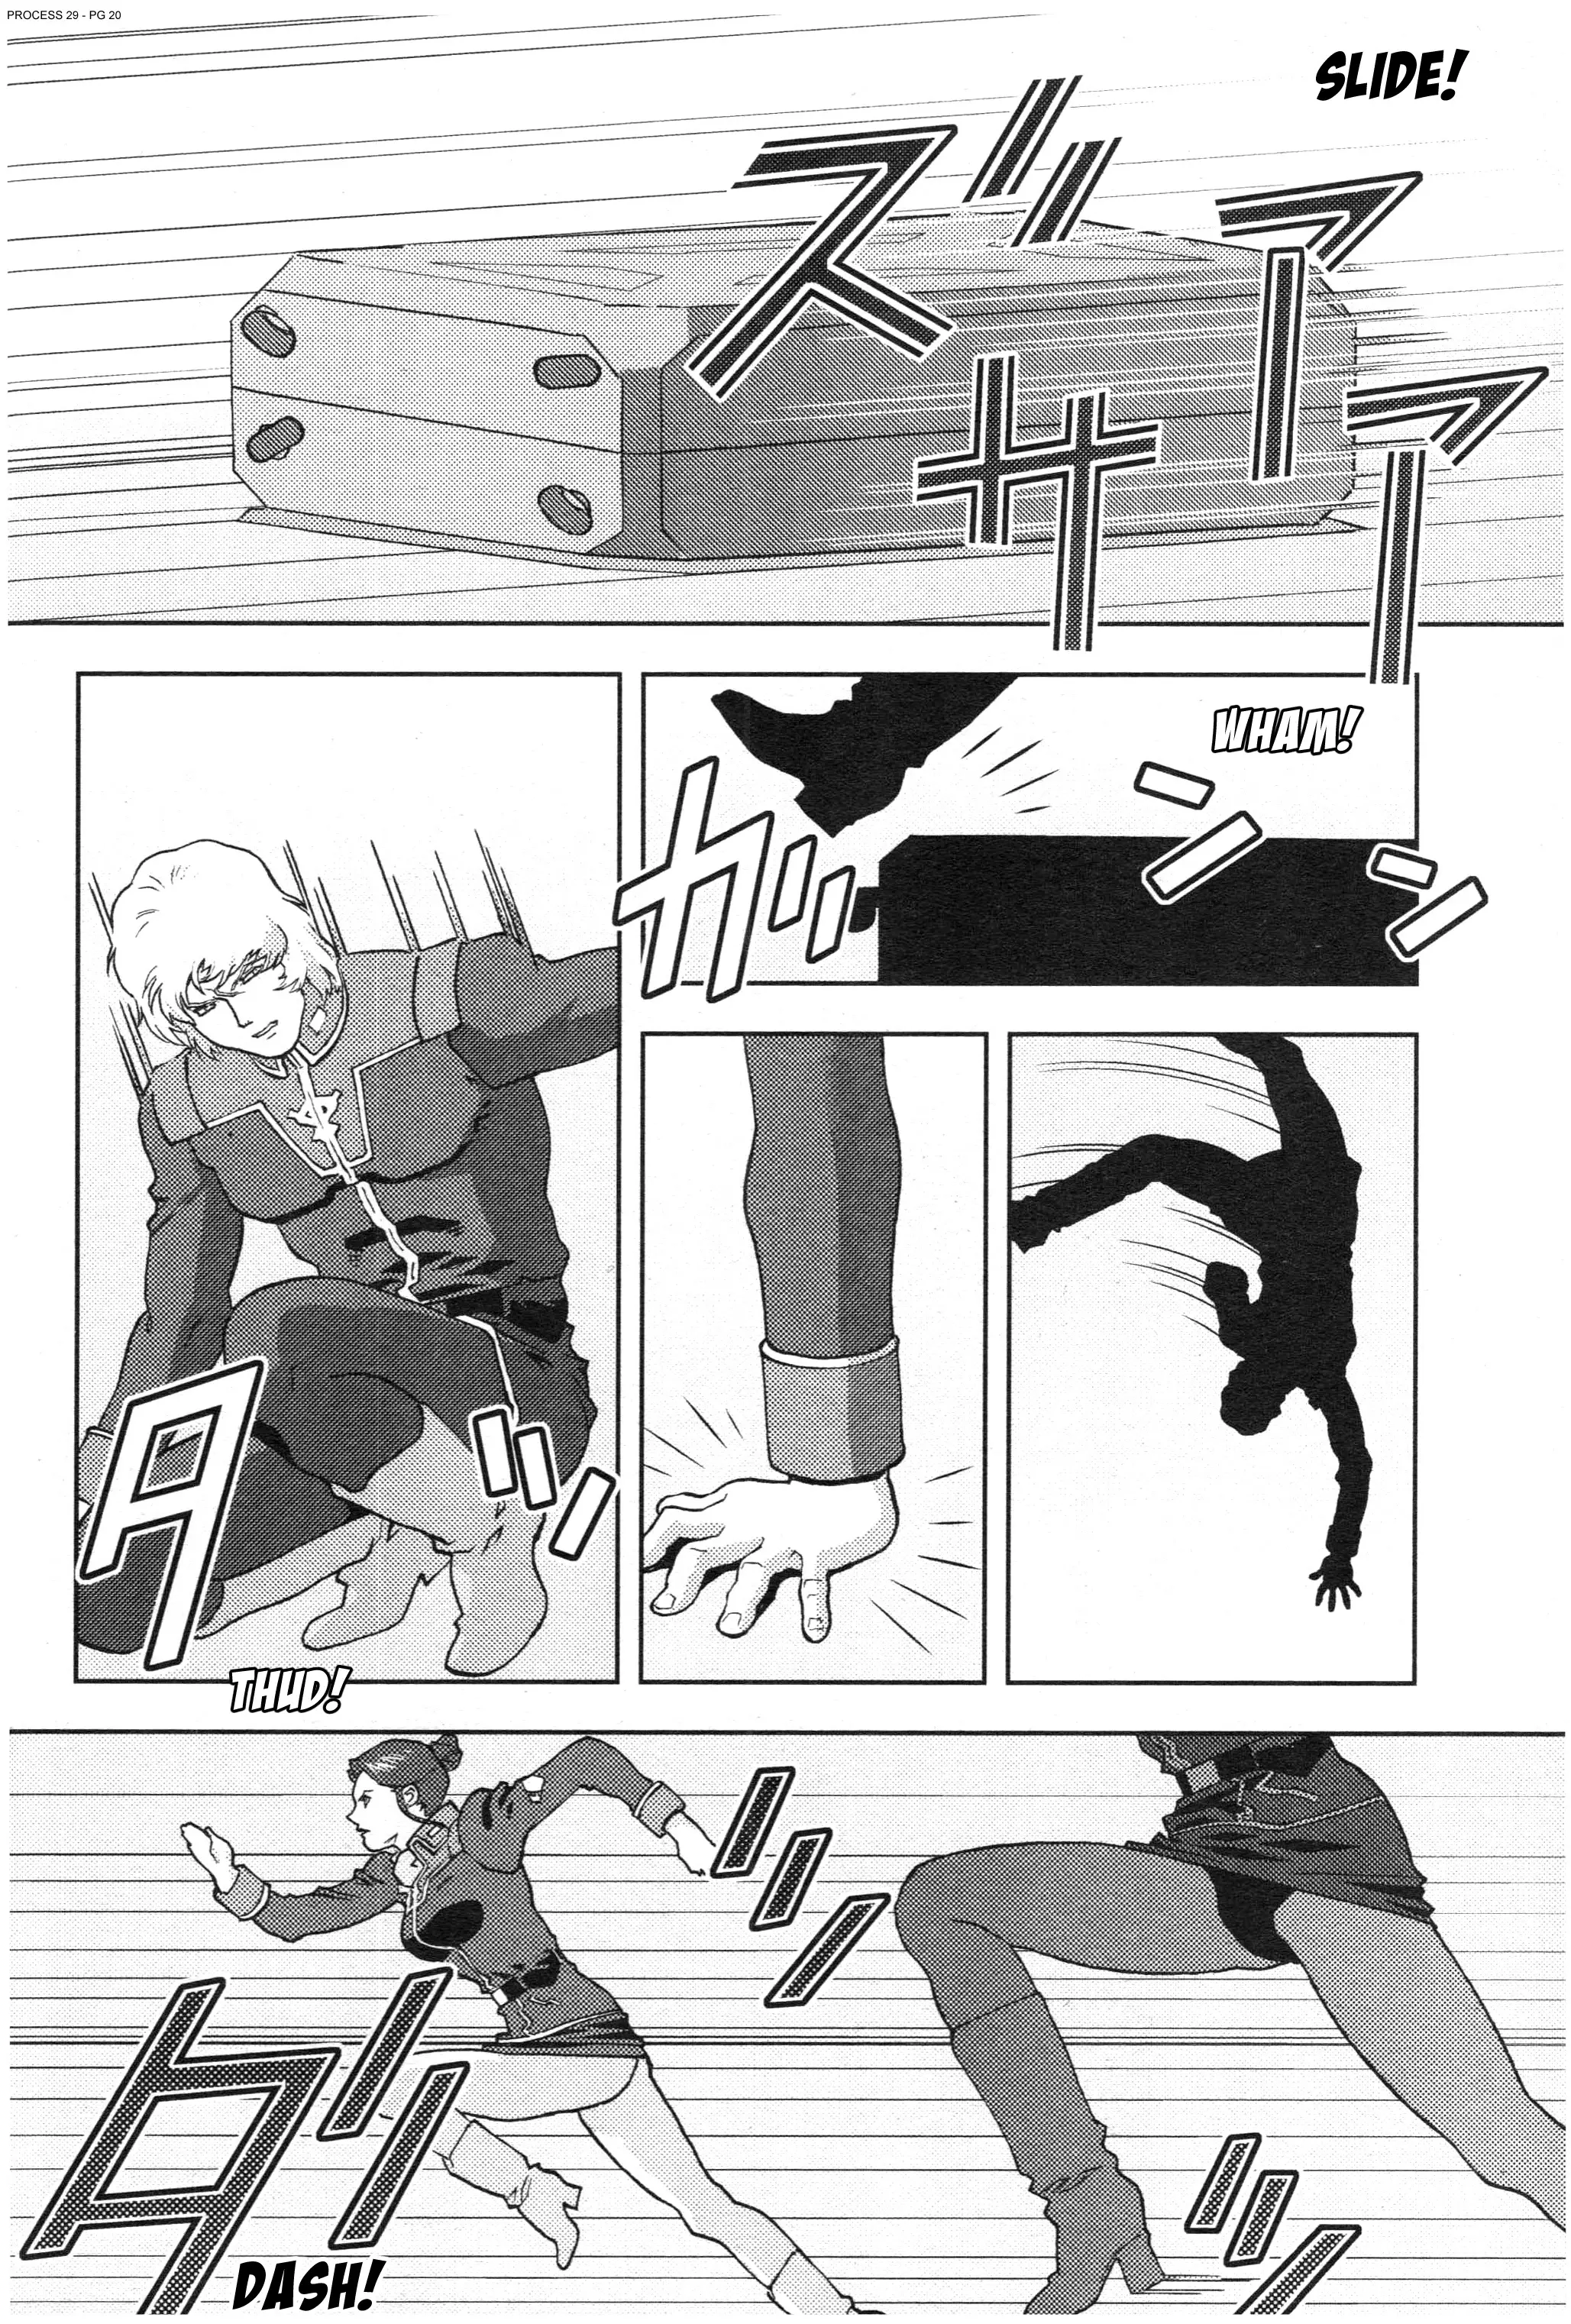 Mobile Suit Zeta Gundam - Define - 78 page 20-f3667cb0